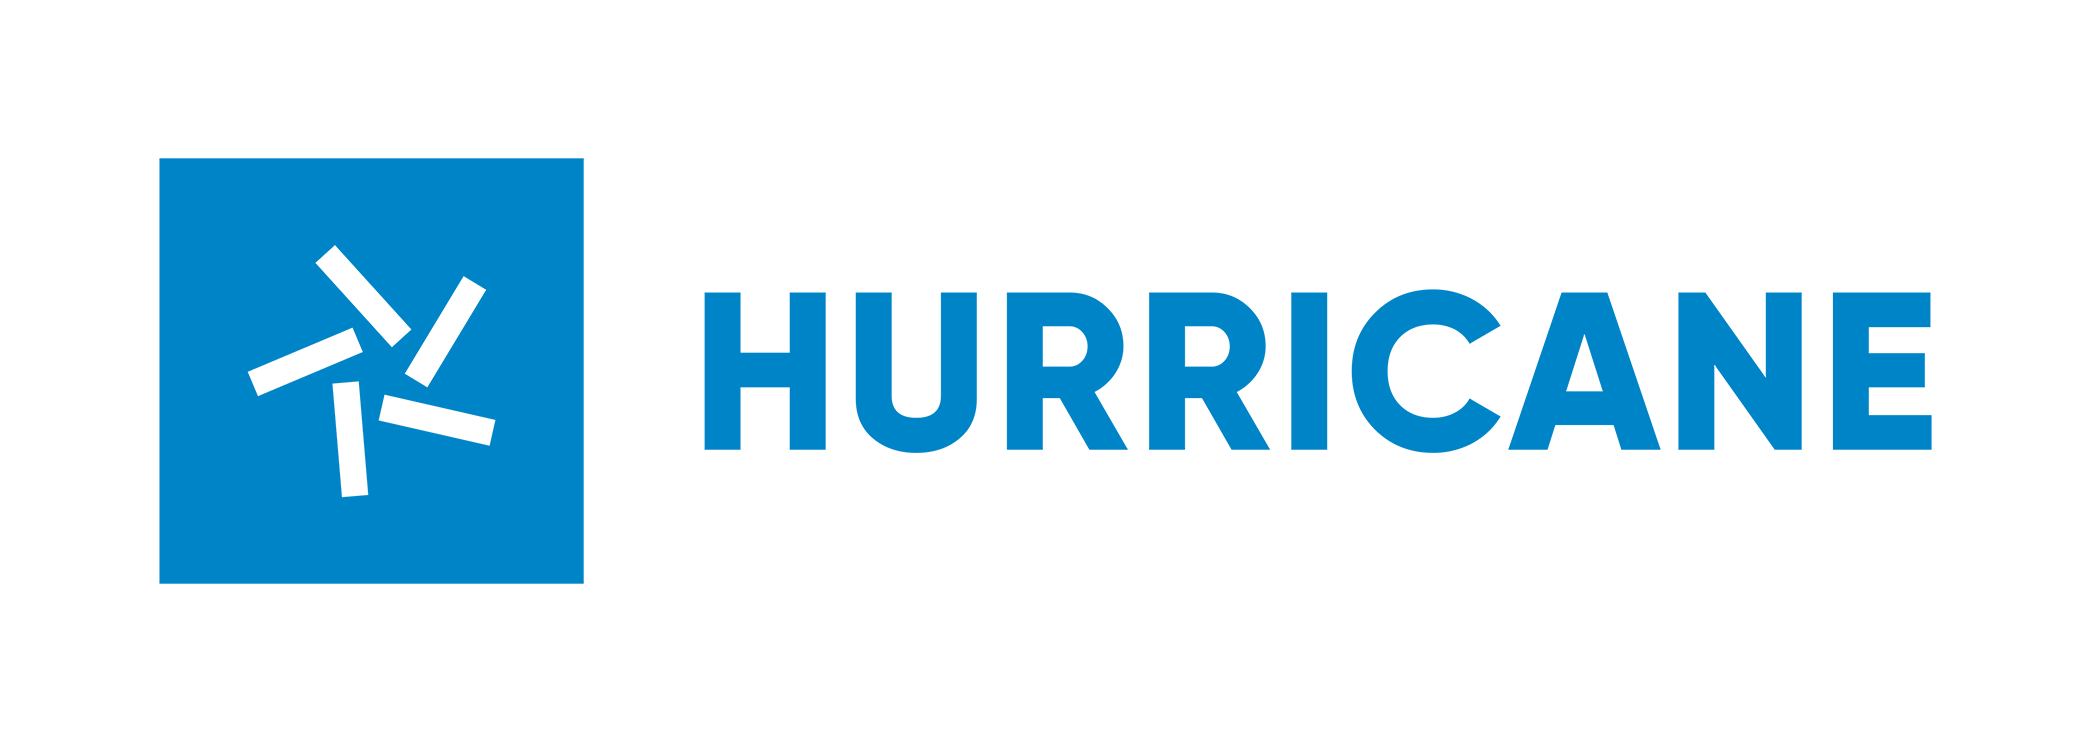 Hurricane-group-logo-horizontal-Francis-Guichardot